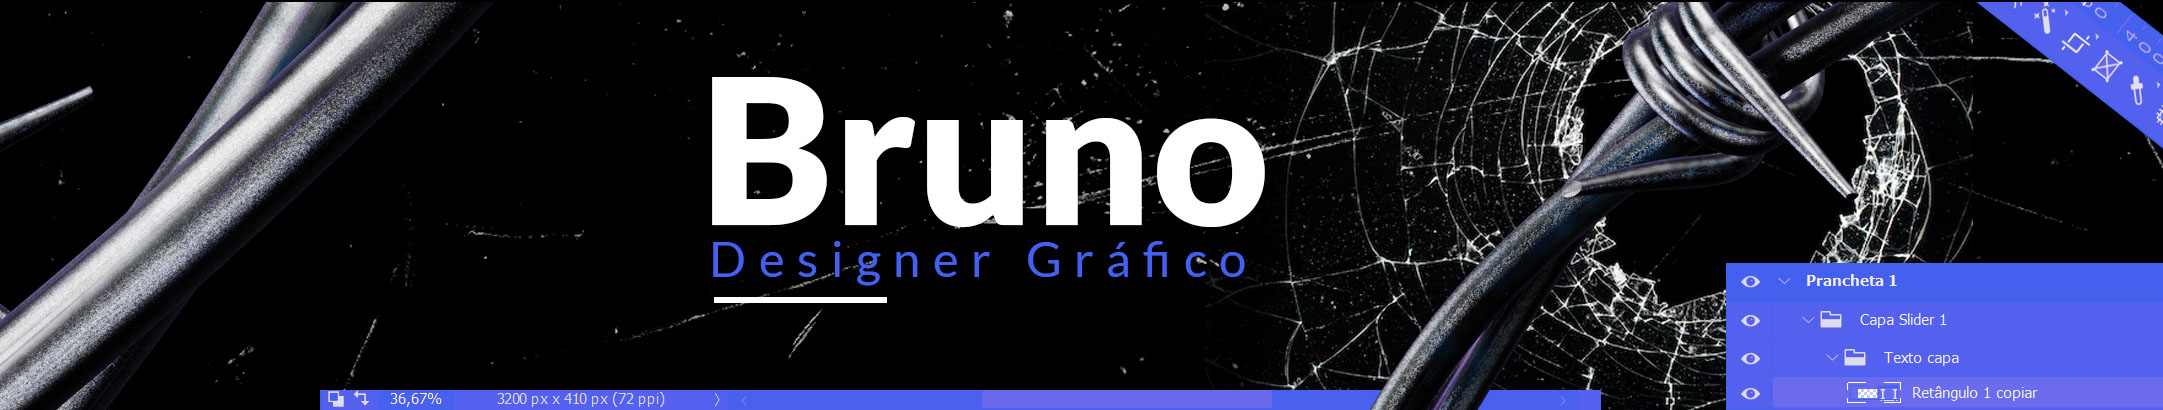 Bruno Santana's profile banner